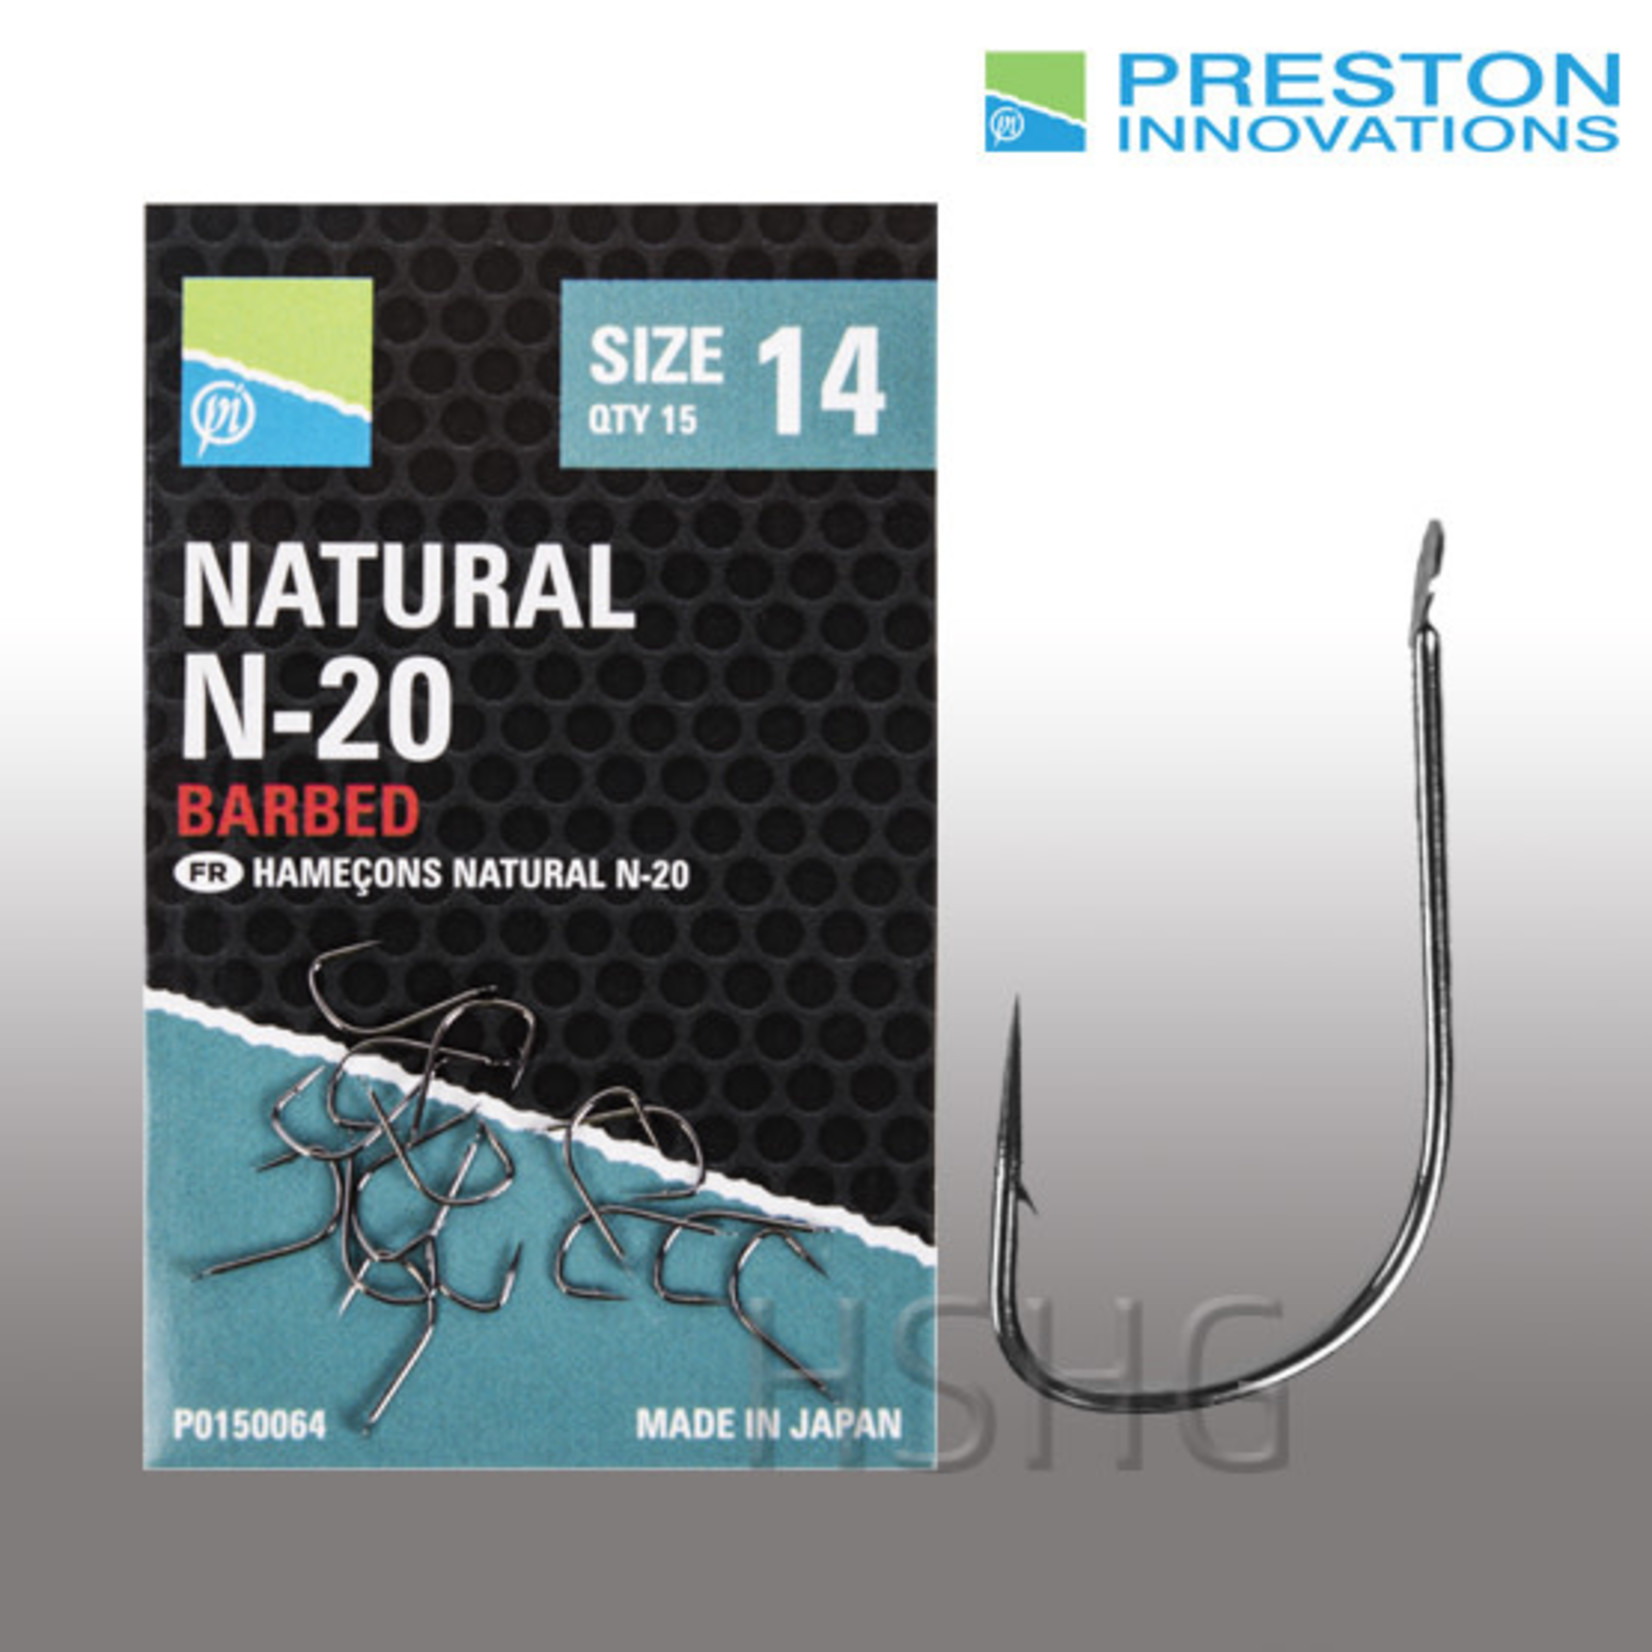 Preston innovations Preston Natural N-20 Vishaak